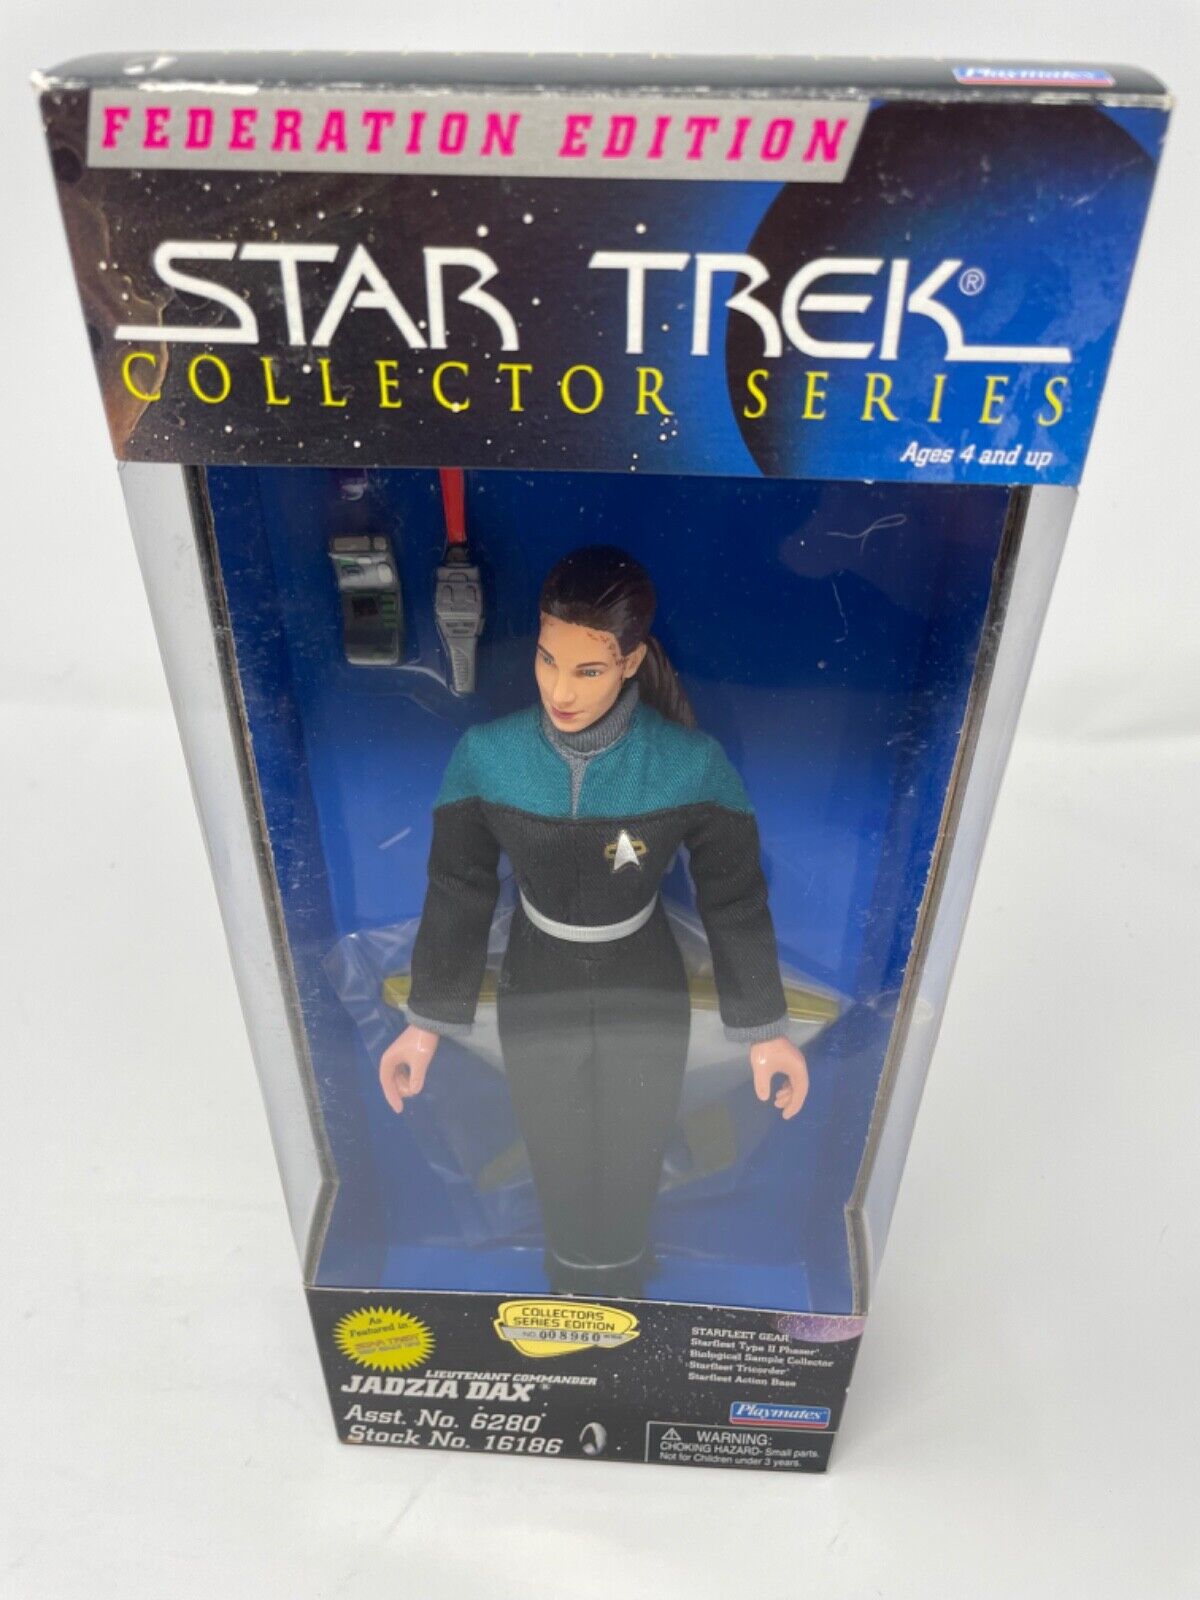 Star Trek Collectors Federation Edition 1997 LT COMMANDER JADZIA DAX 